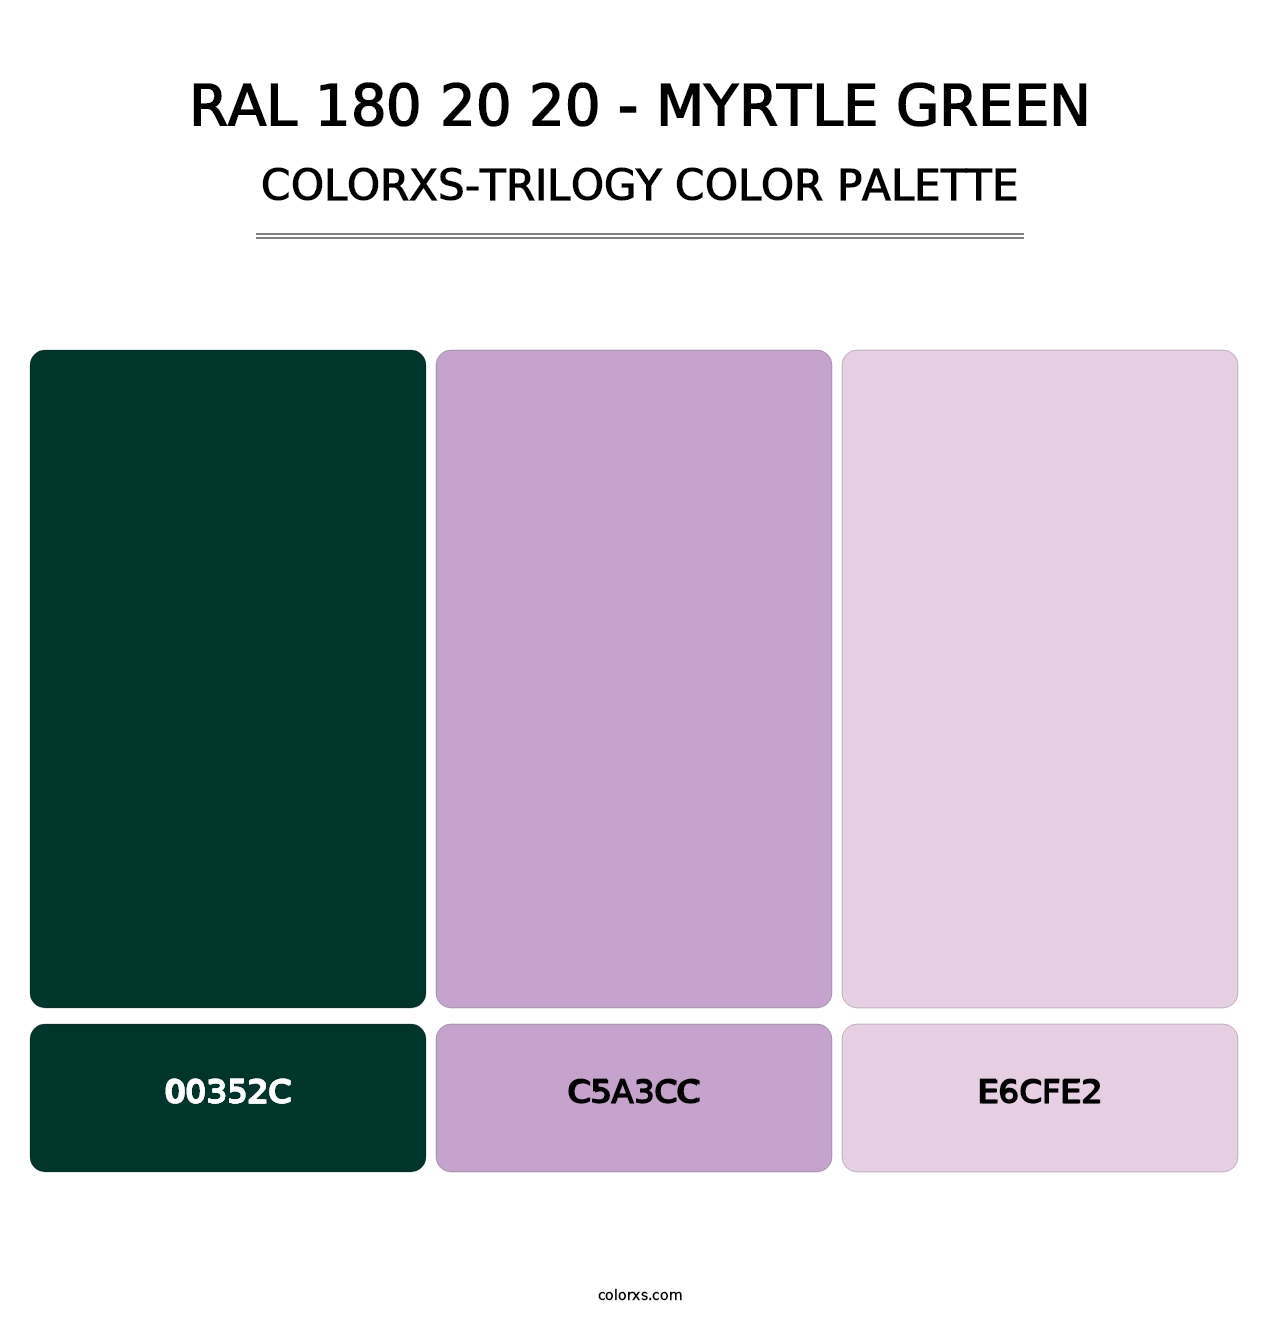 RAL 180 20 20 - Myrtle Green - Colorxs Trilogy Palette